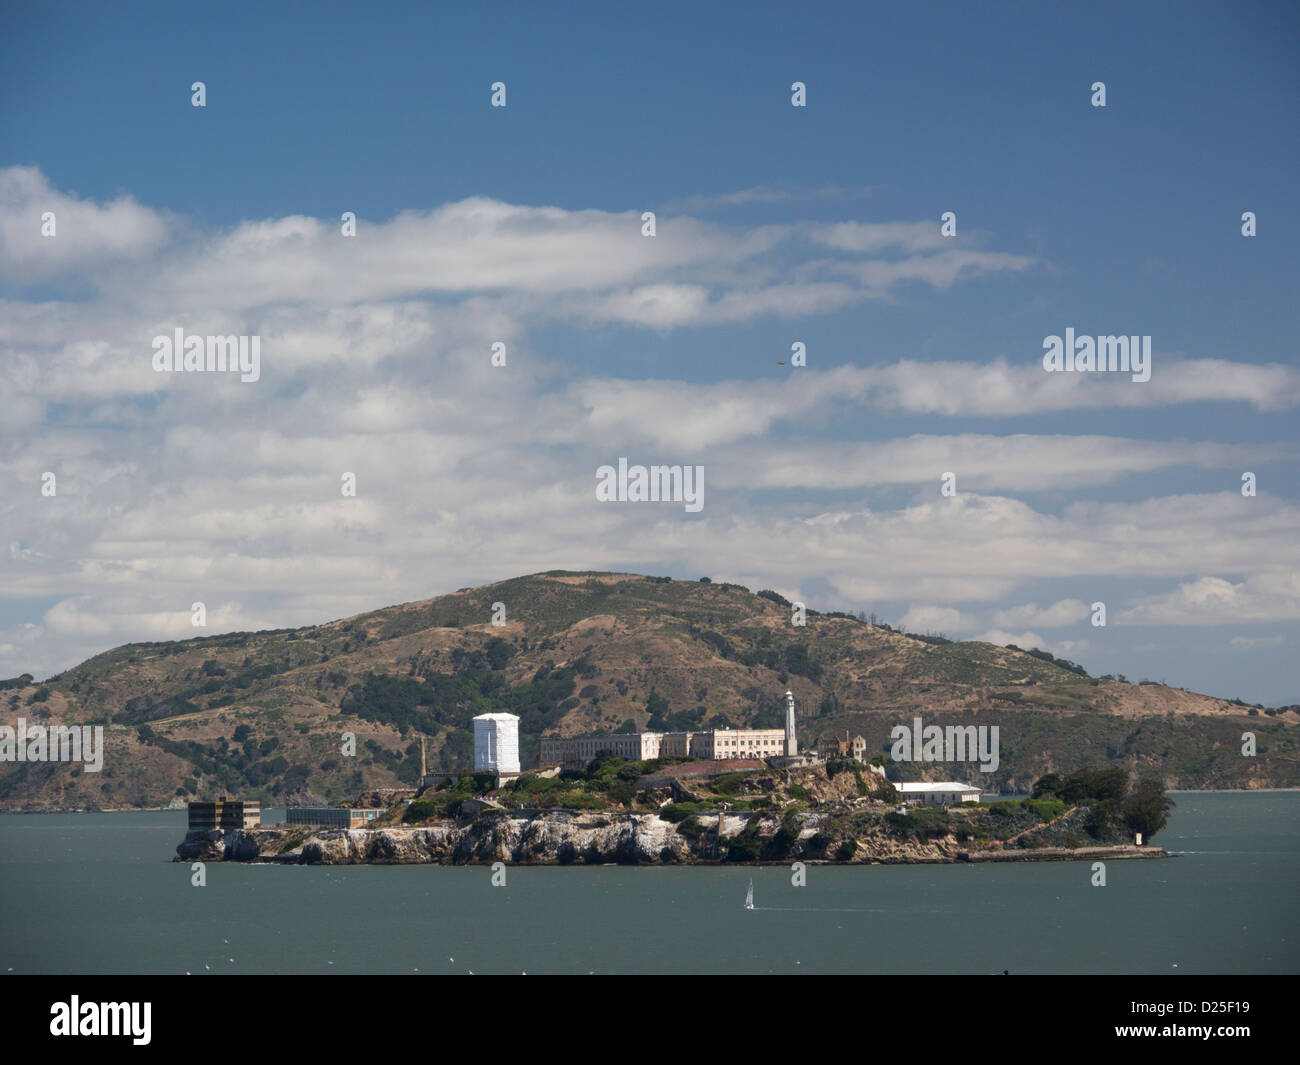 Alcatraz prison and island in San Francisco Bay Stock Photo